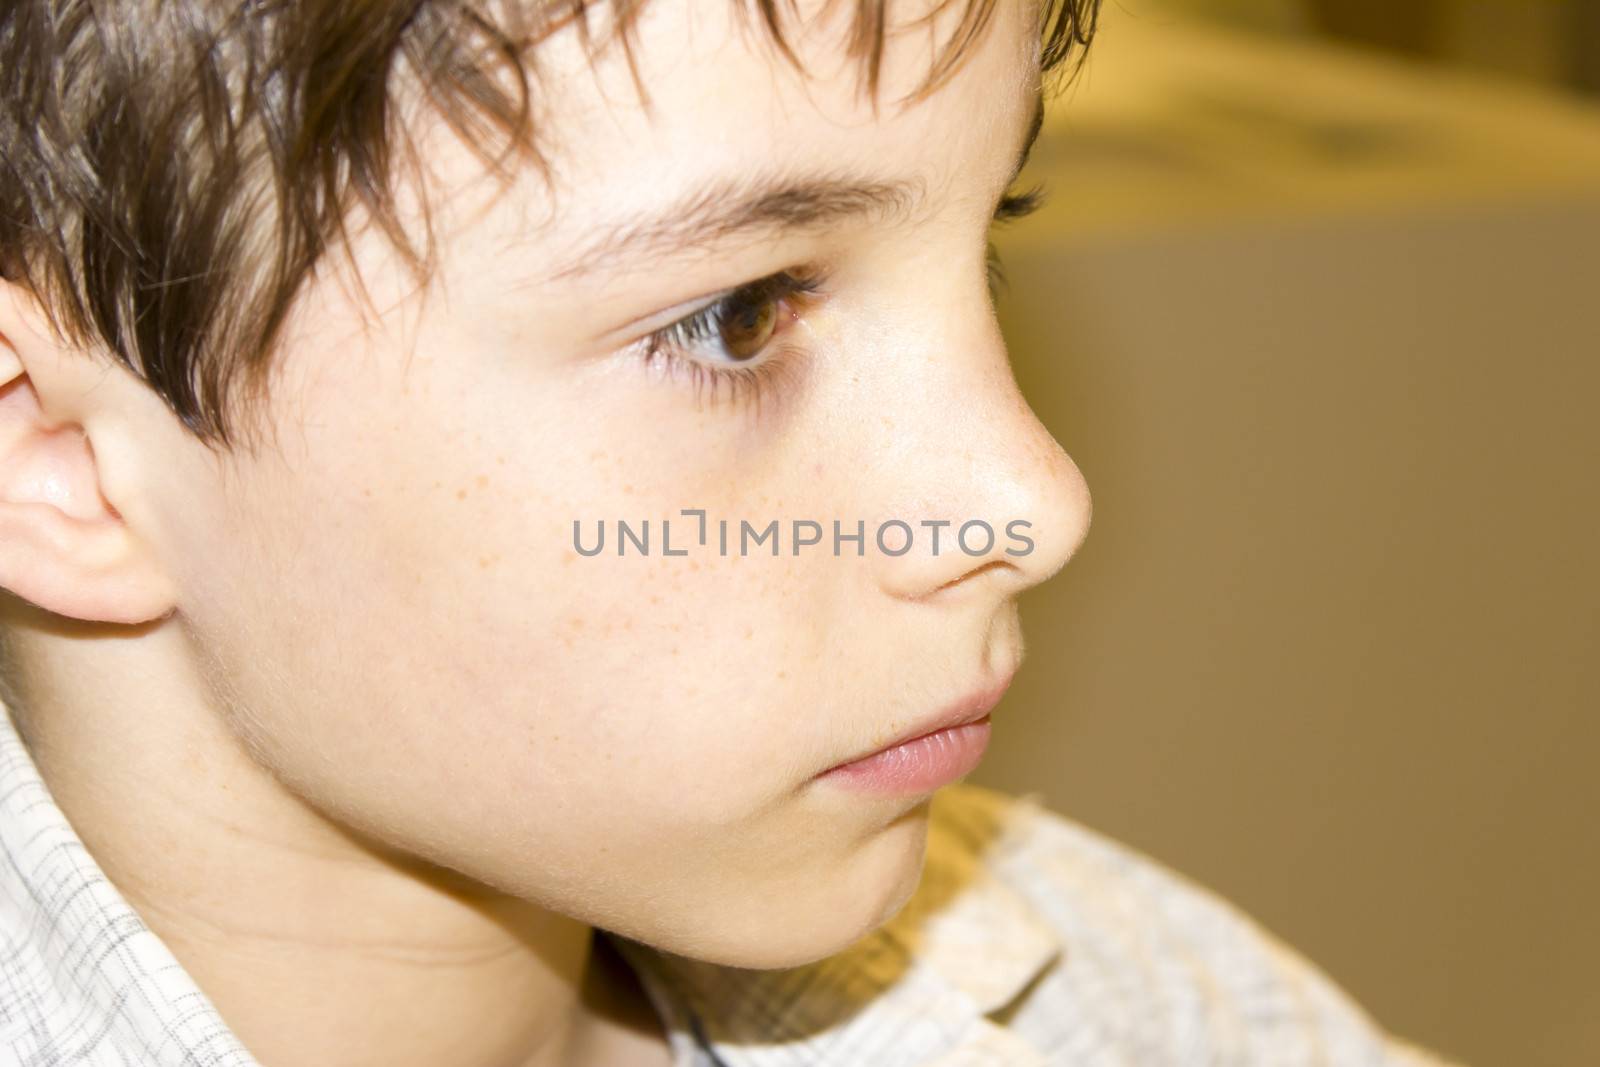 portrait of a cute young boy closeup